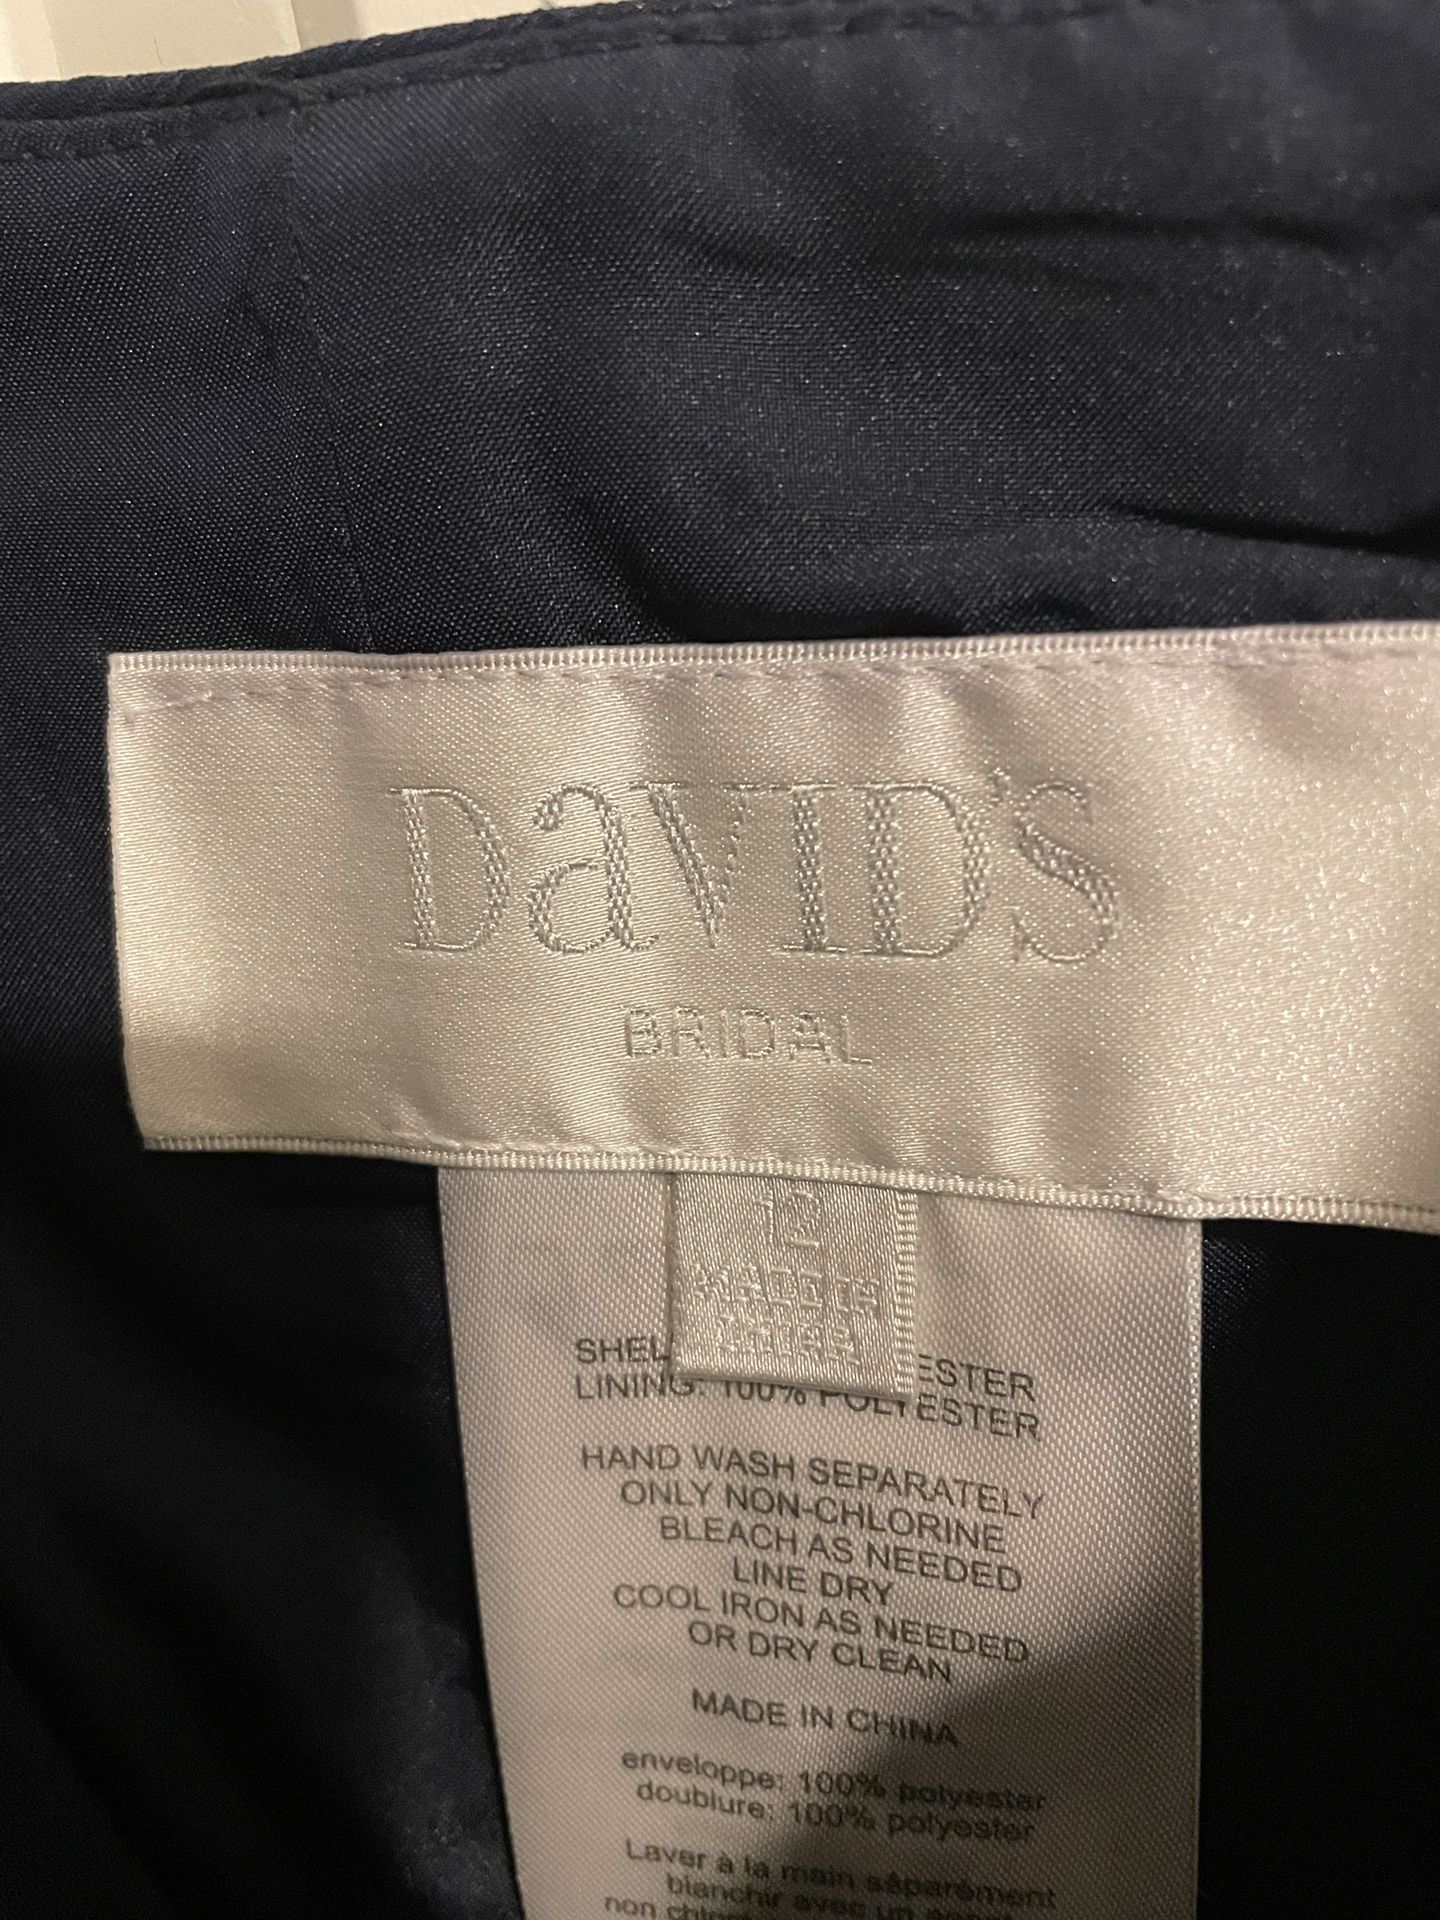 David’s Bridal Size 12 Dress 